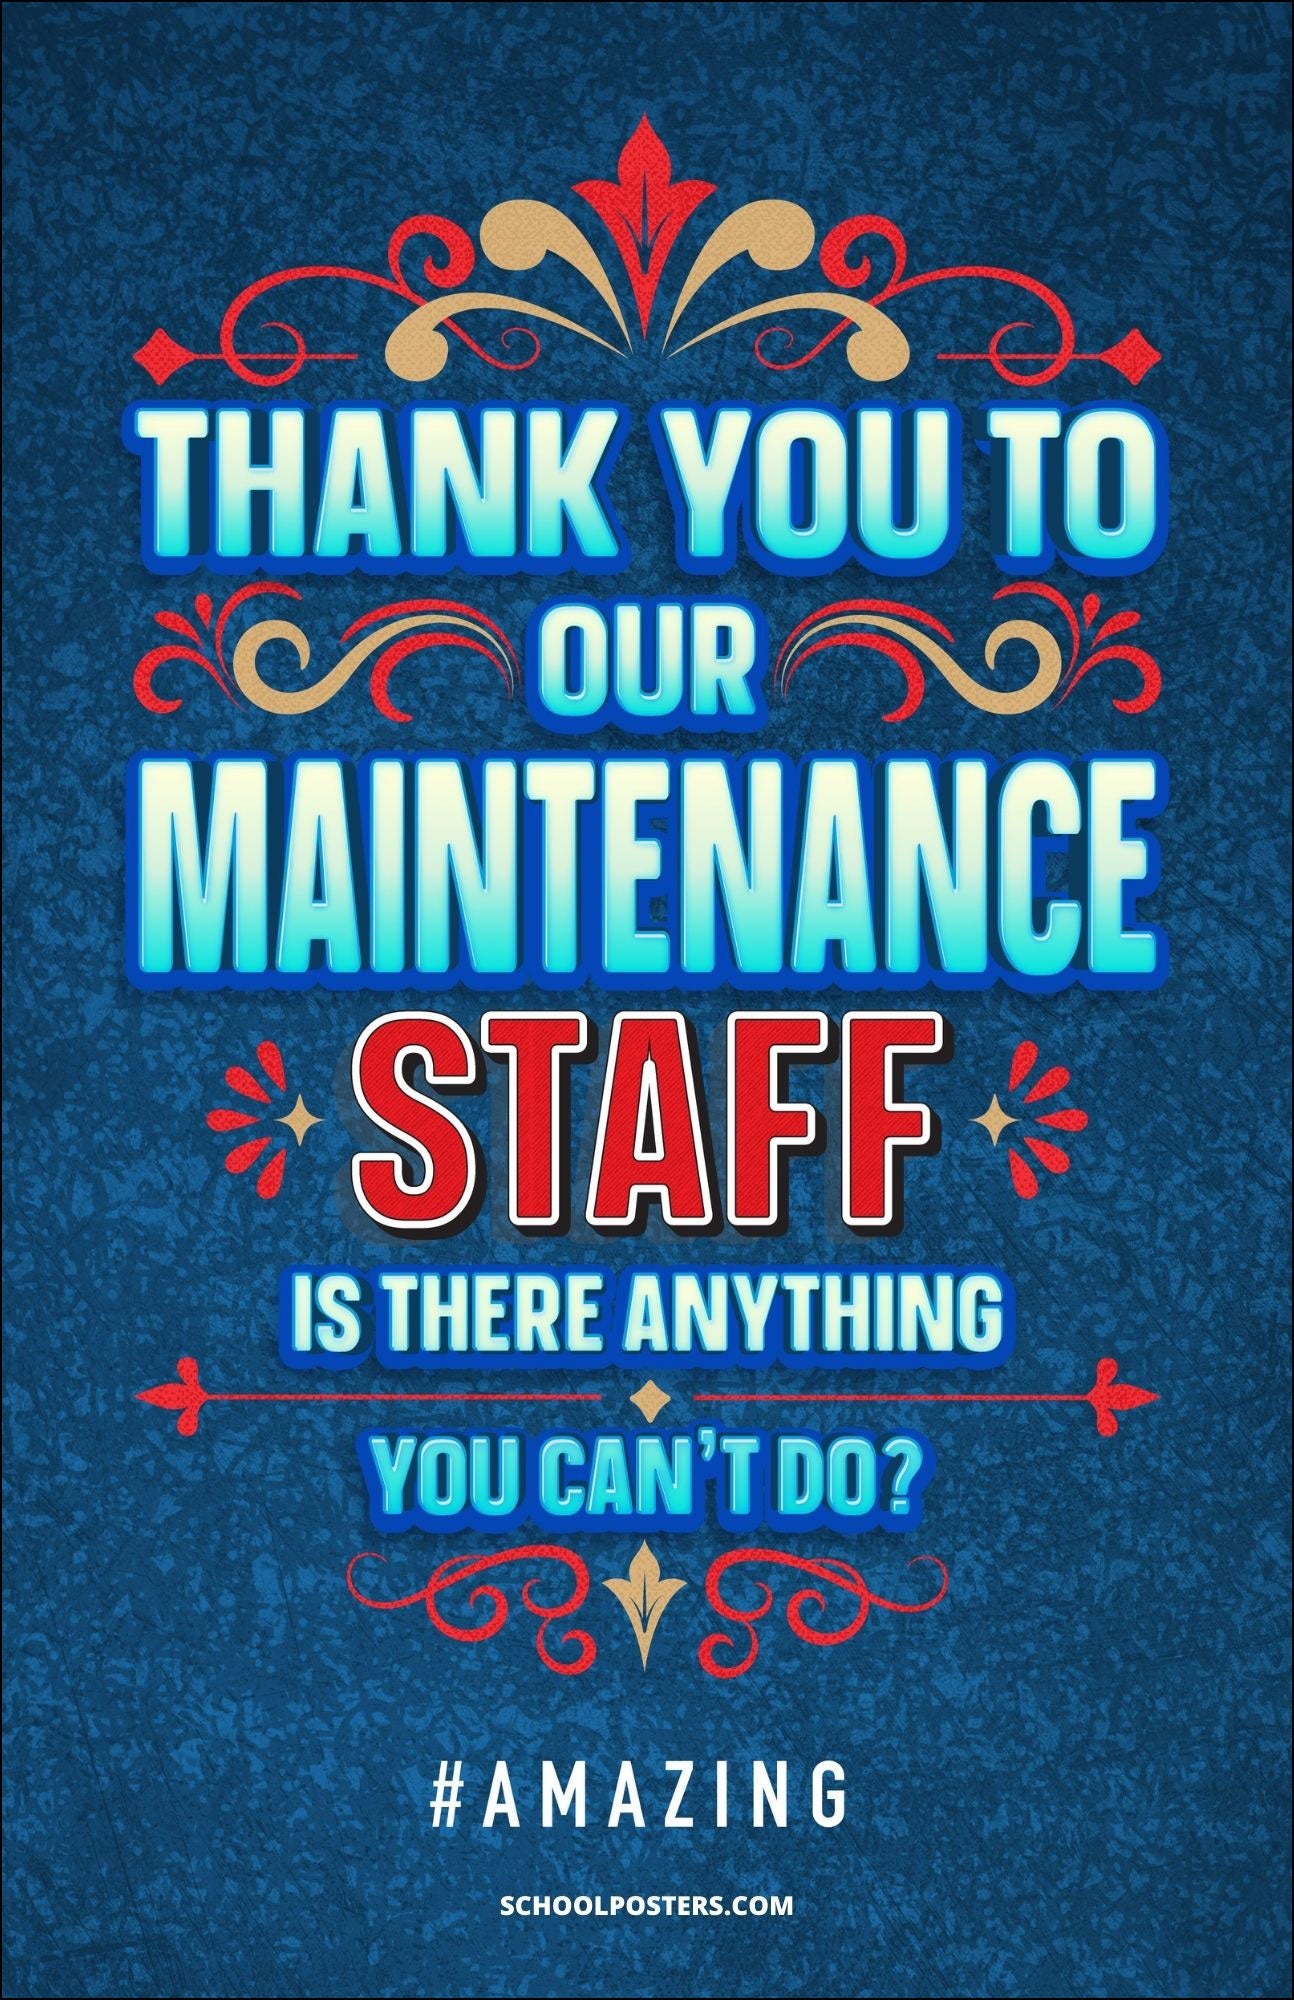 Thank You Maintenance Staff Poster